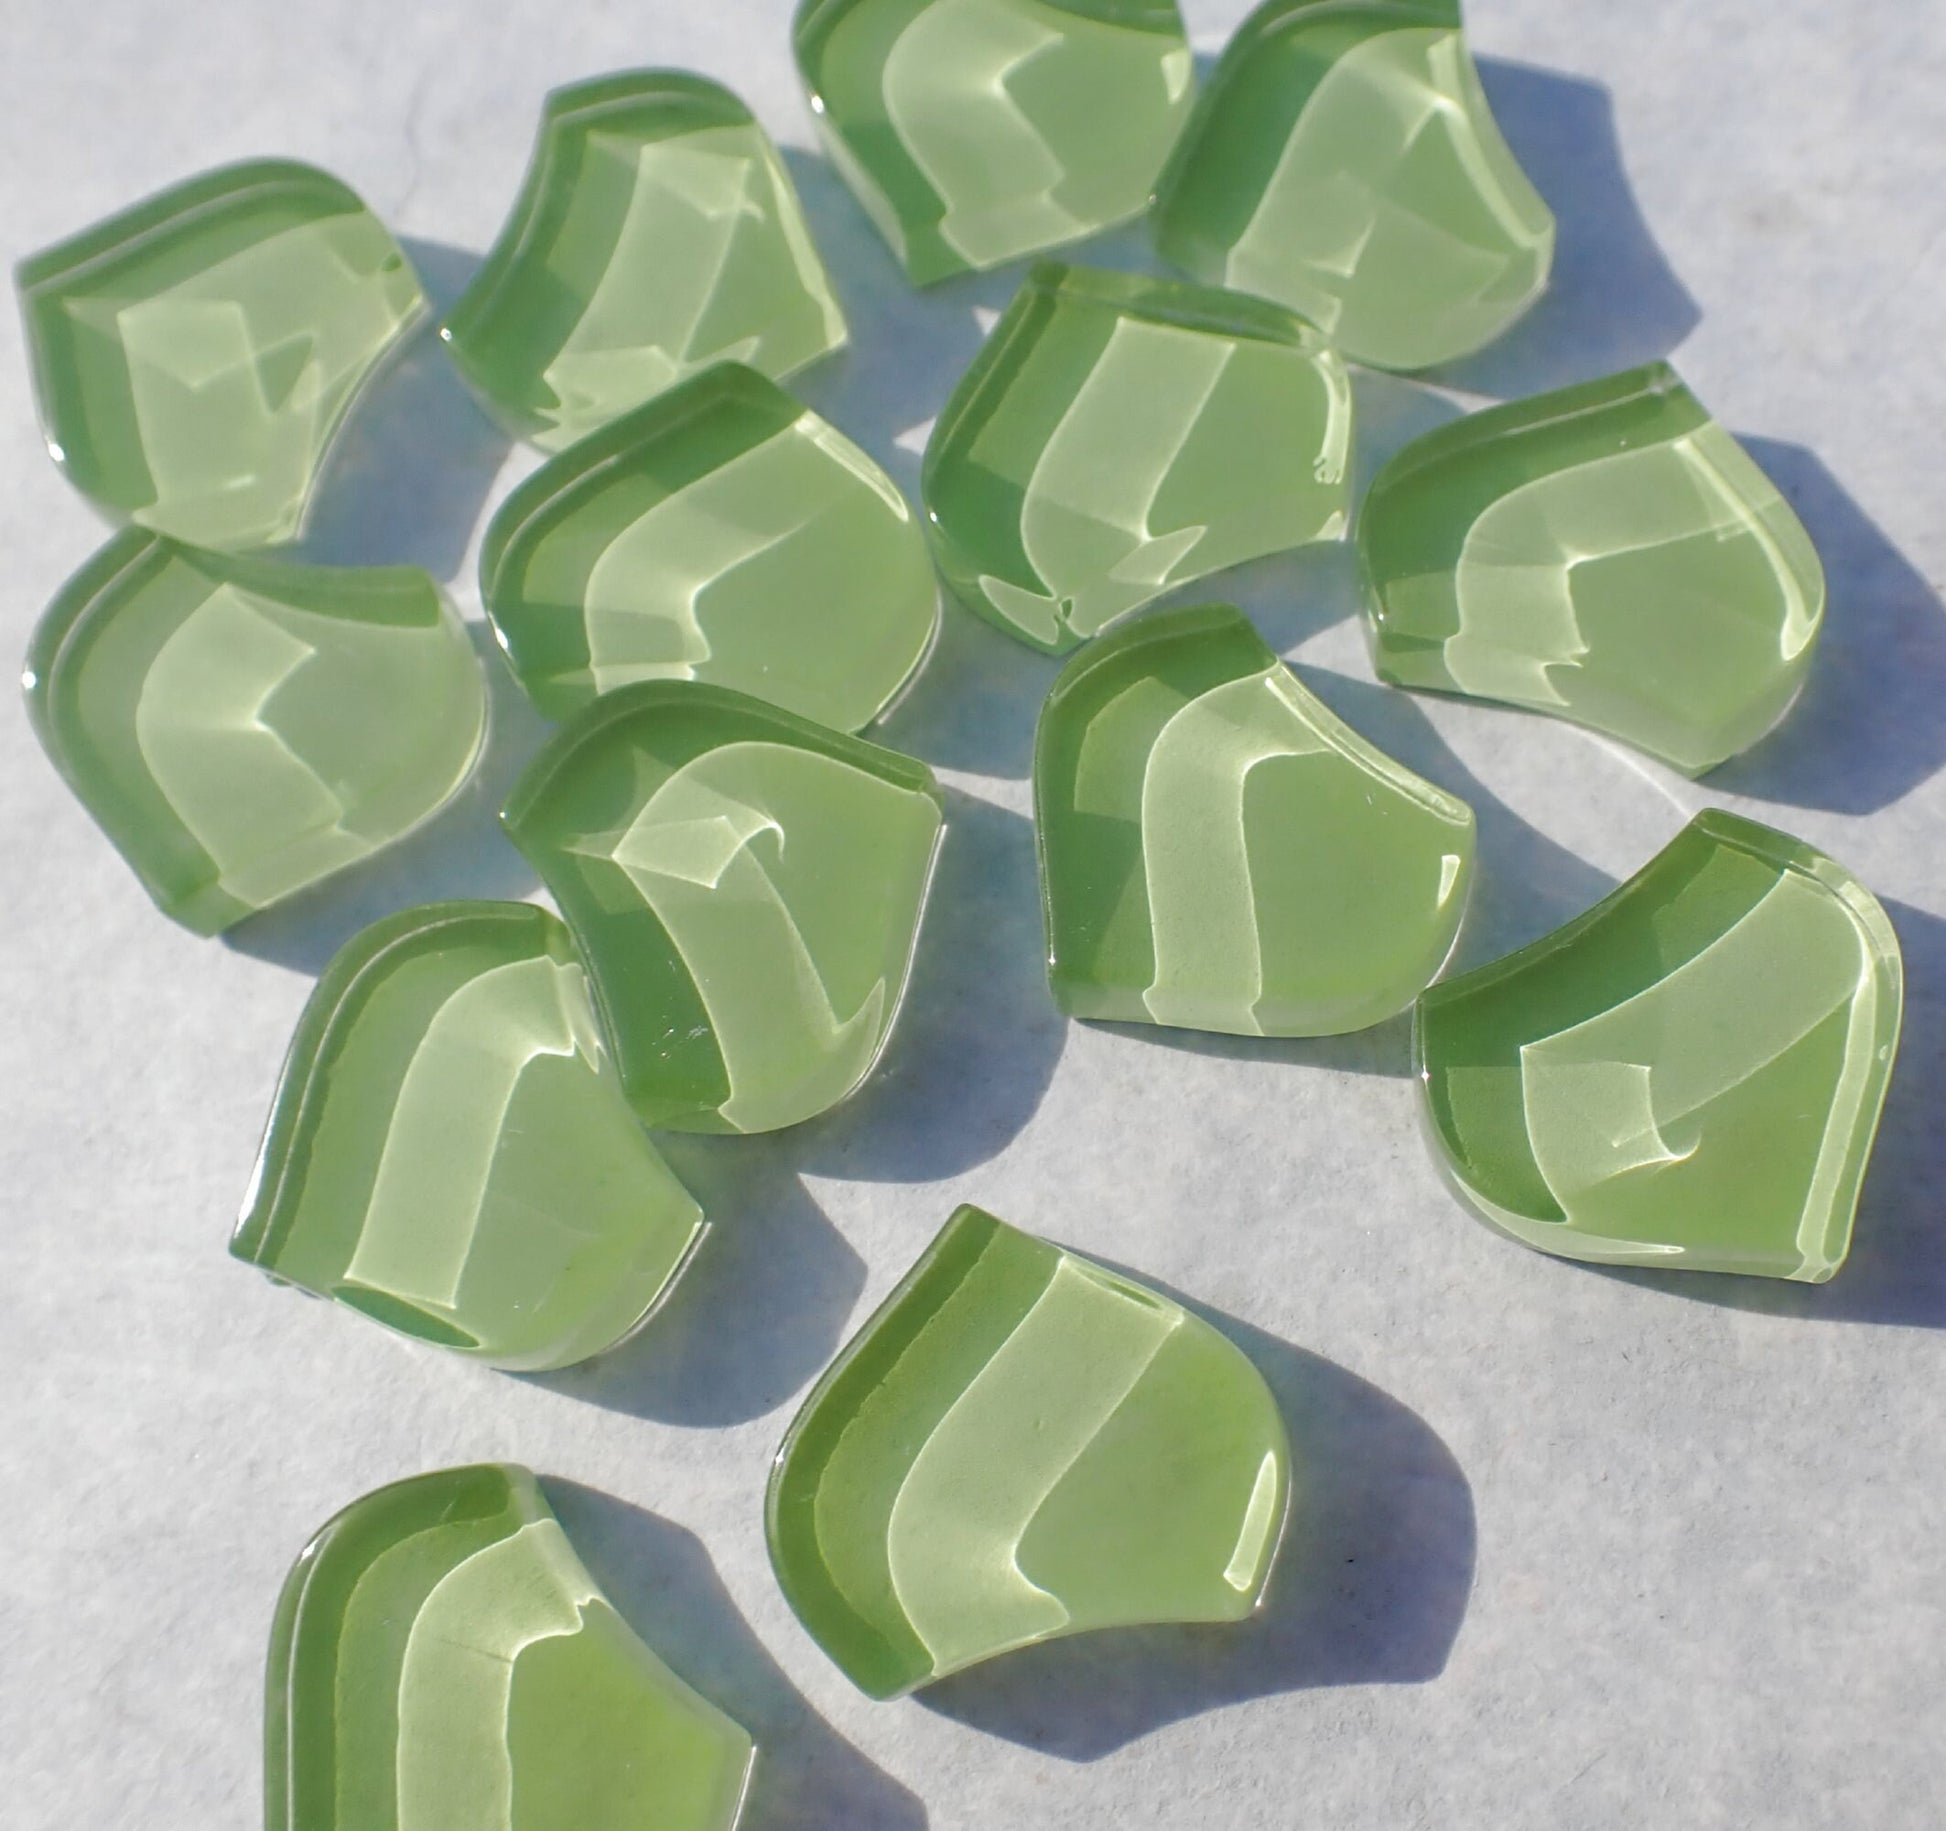 Fresh Green Fishscale Glass Tiles - 50g - Approximately 30 Crystal Mandala Mosaic Tiles